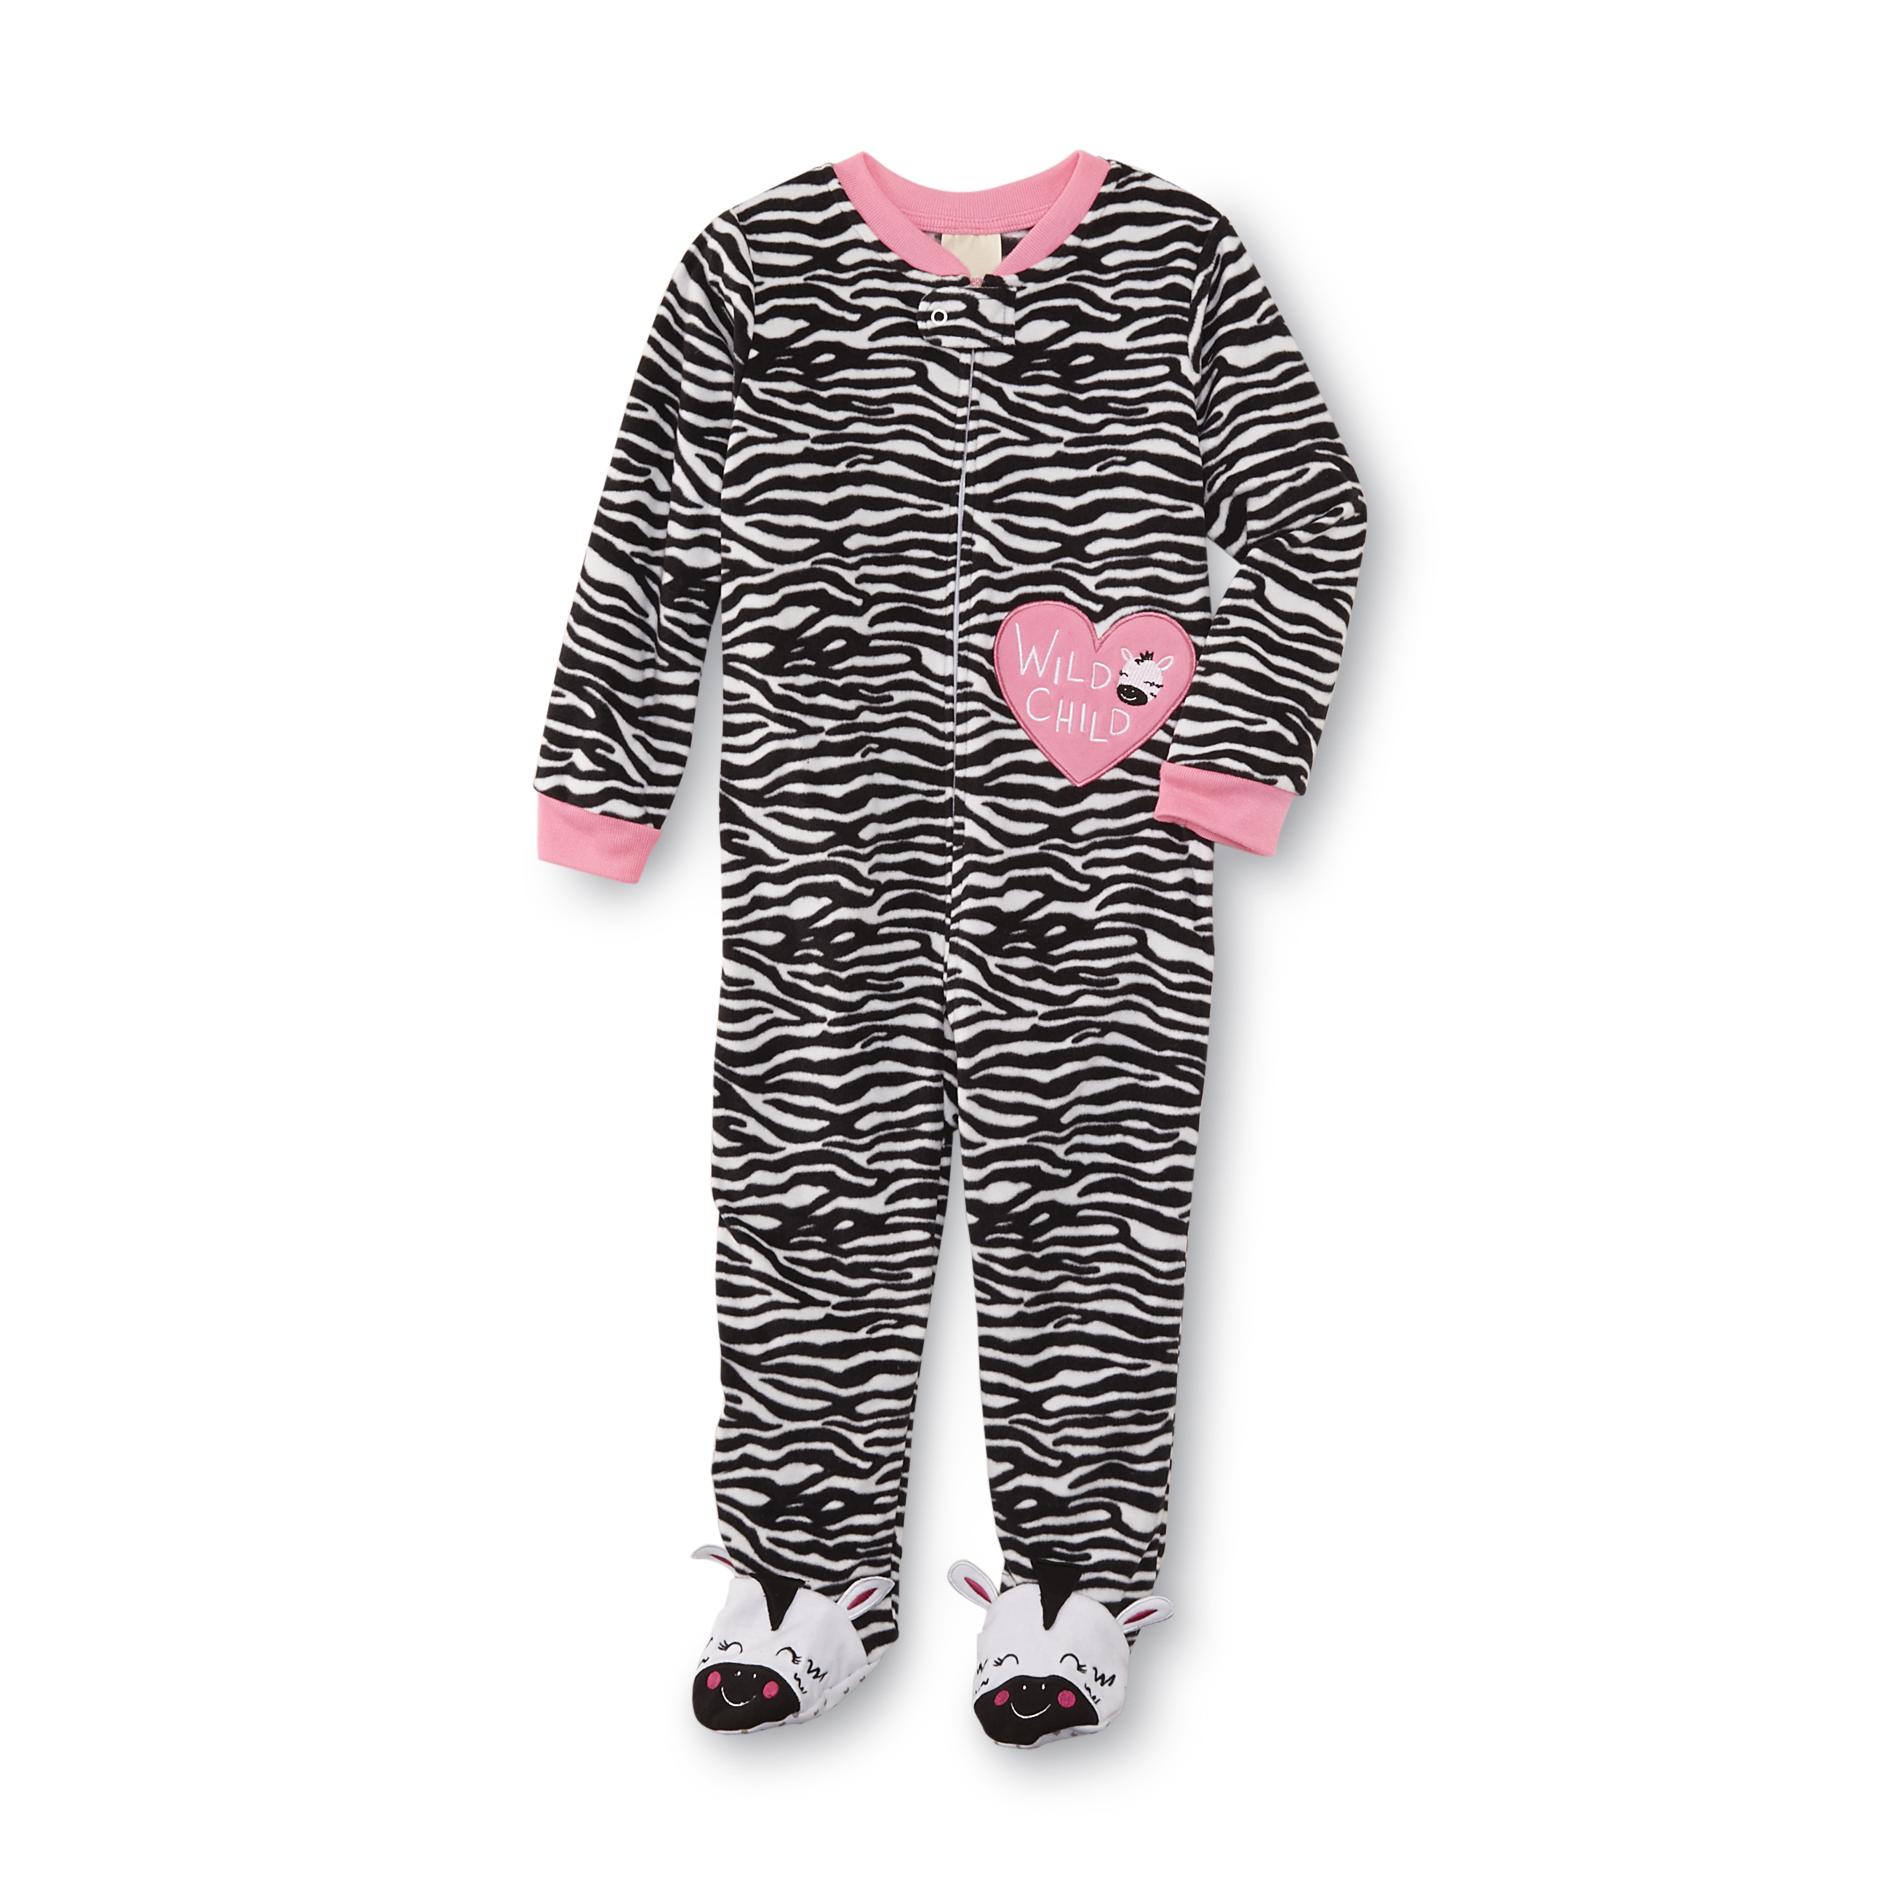 Infant & Toddler Girl's Footed Bodysuit - Zebra